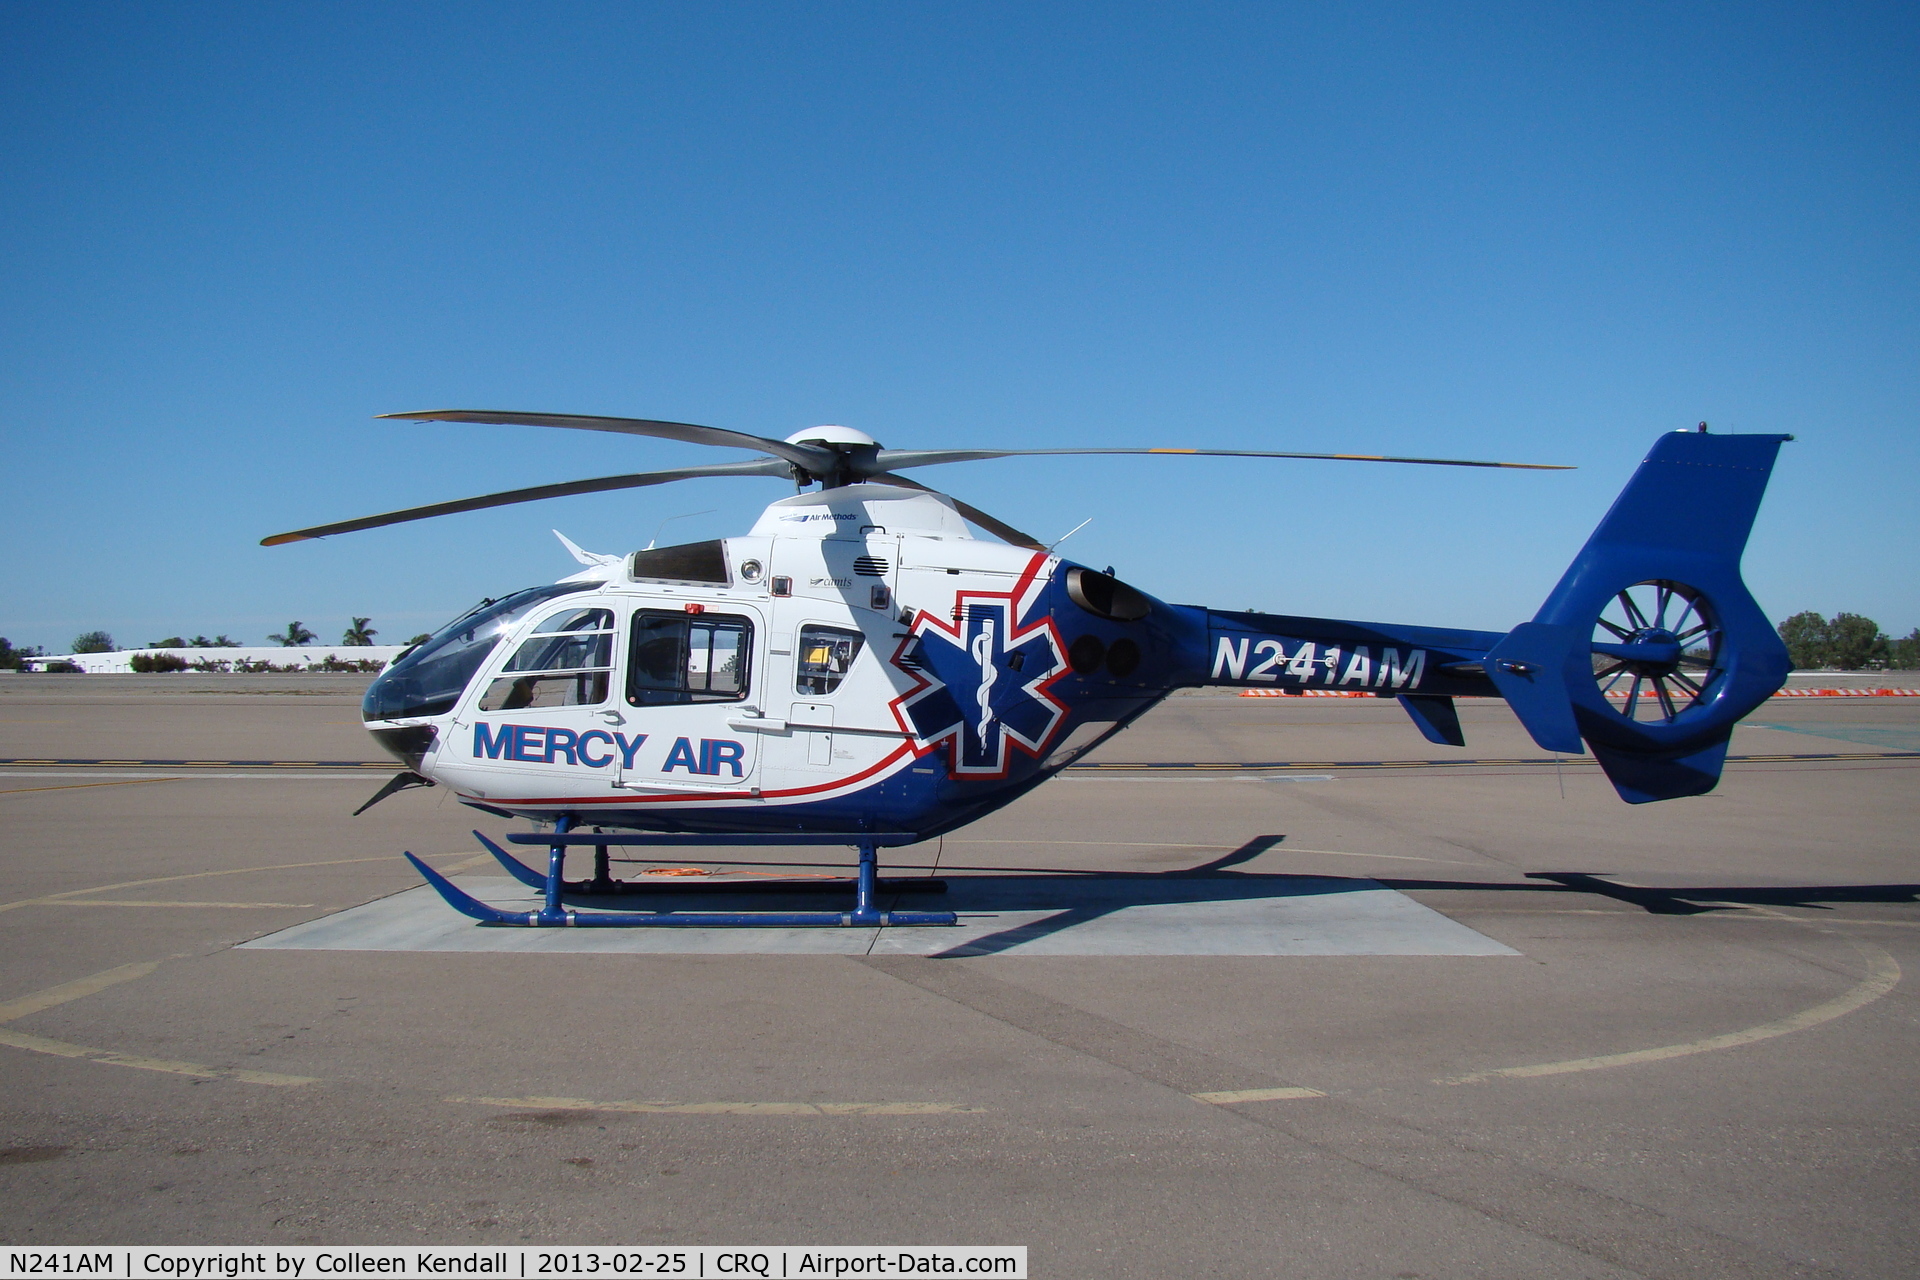 N241AM, 2007 Eurocopter EC-135P-2+ C/N 0573, Air Methods' Mercy Air 5 at McClellan Palomar Airport